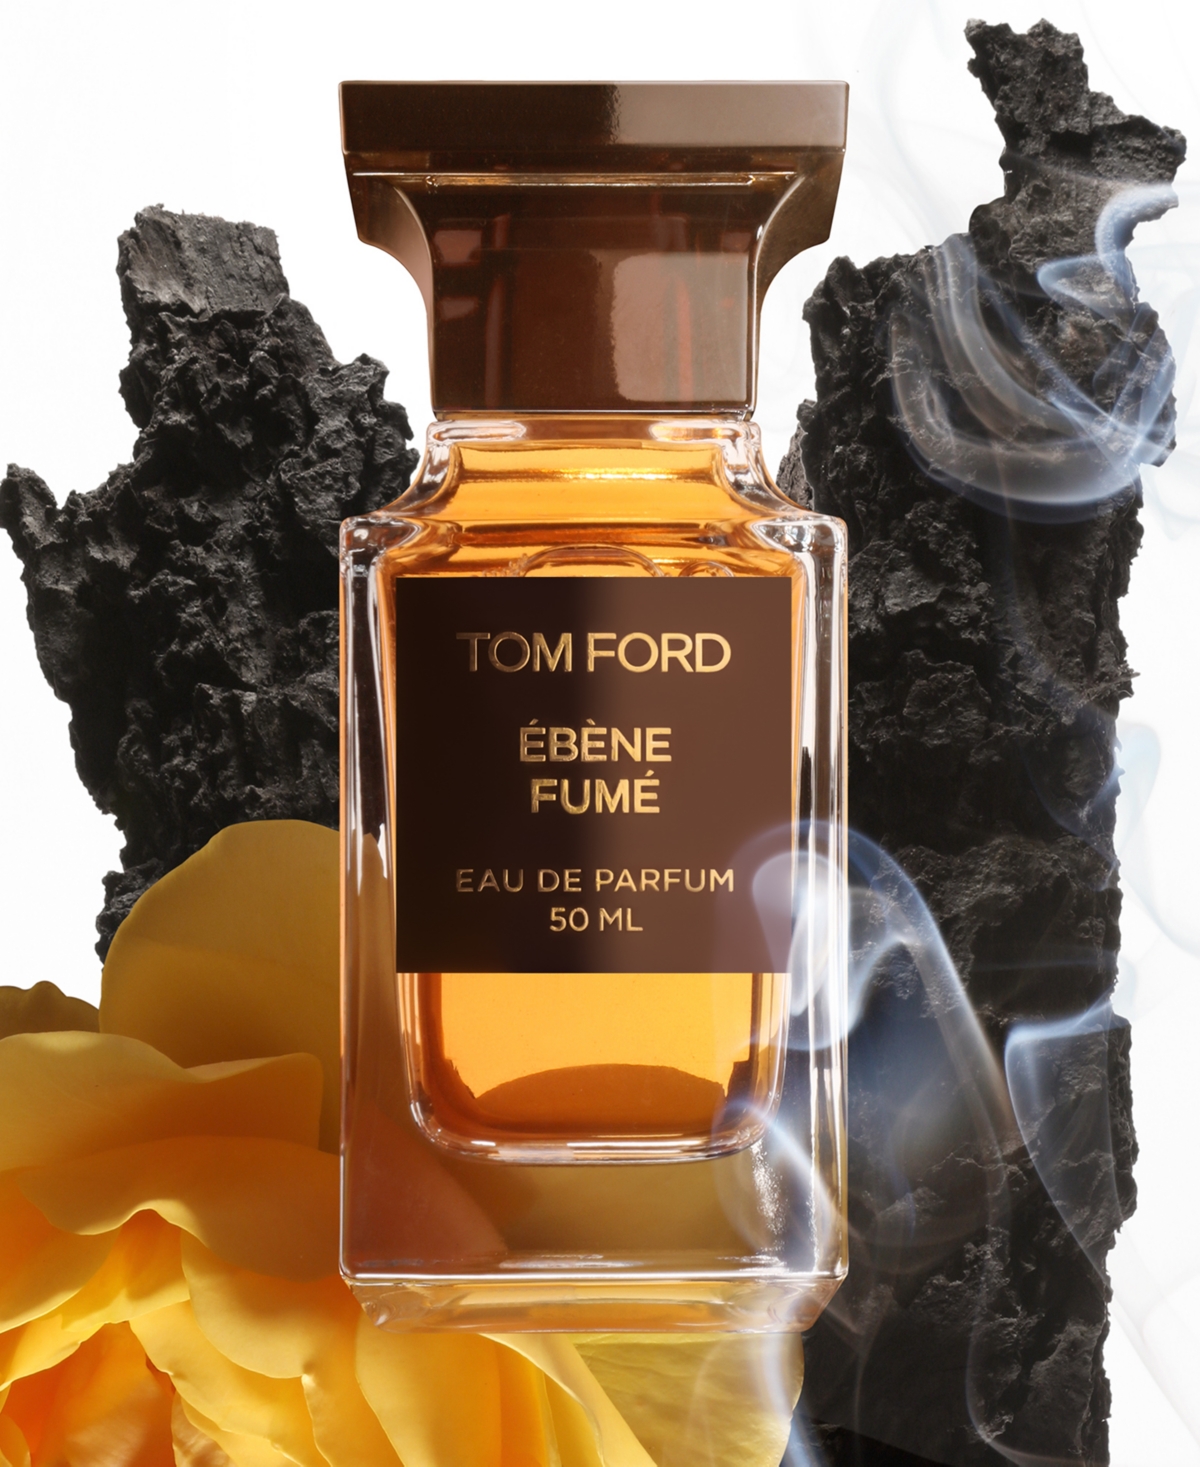 TOM FORD Tobacco Vanille Decanter Eau de Parfum (250ml) | Harrods US